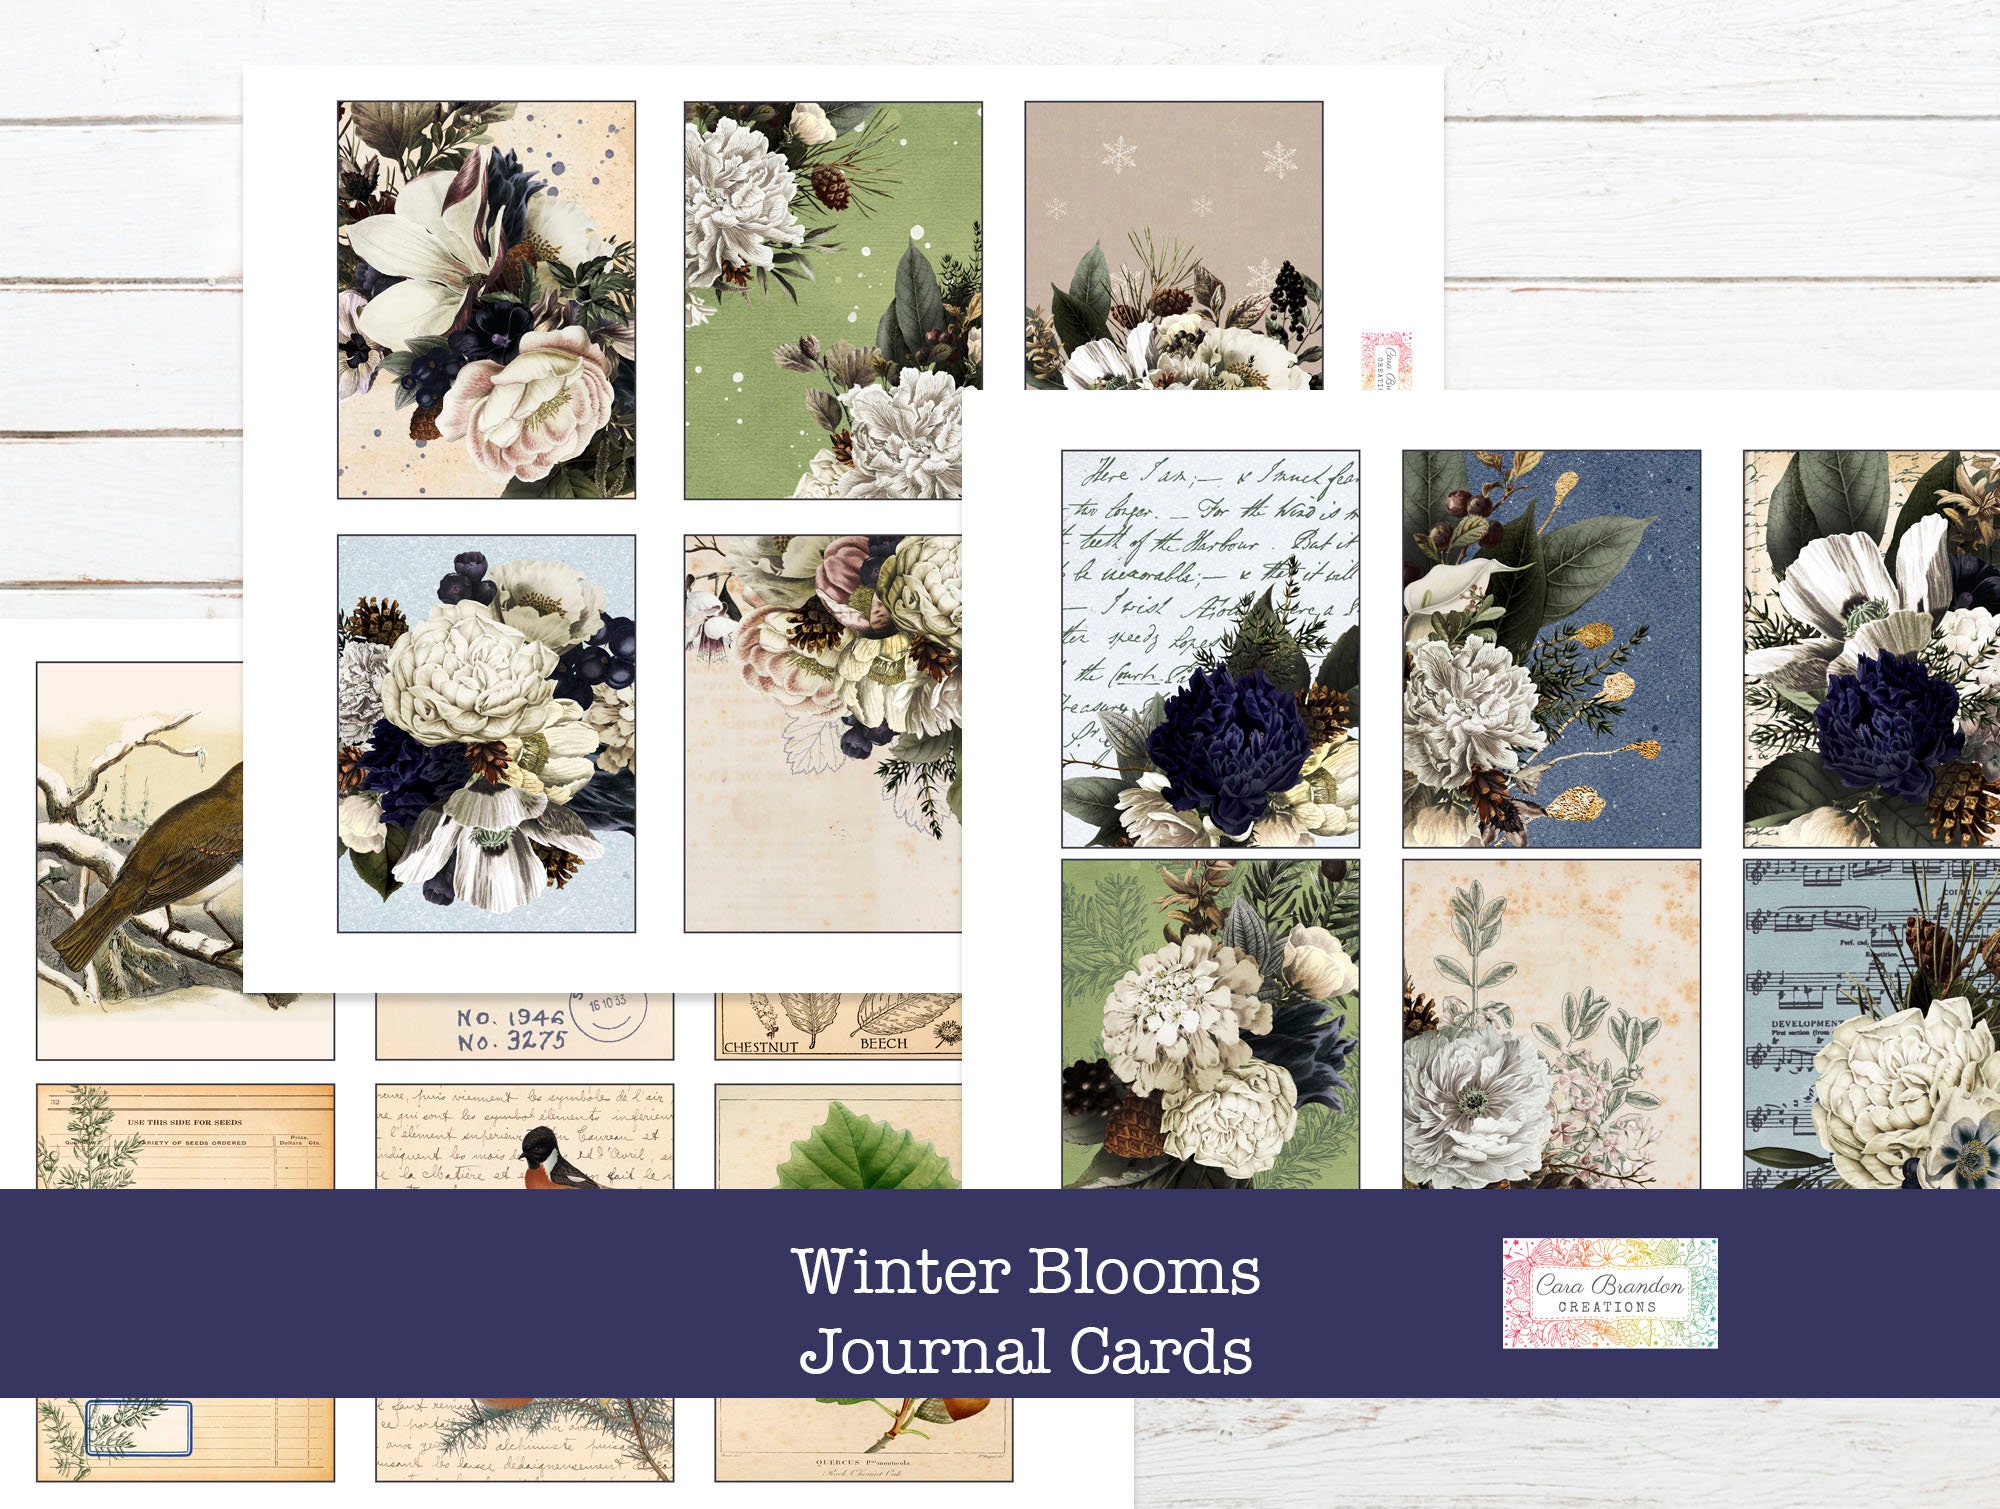 Blue and Yellow Floral Digital Junk Journal kit – Cara Brandon Creations